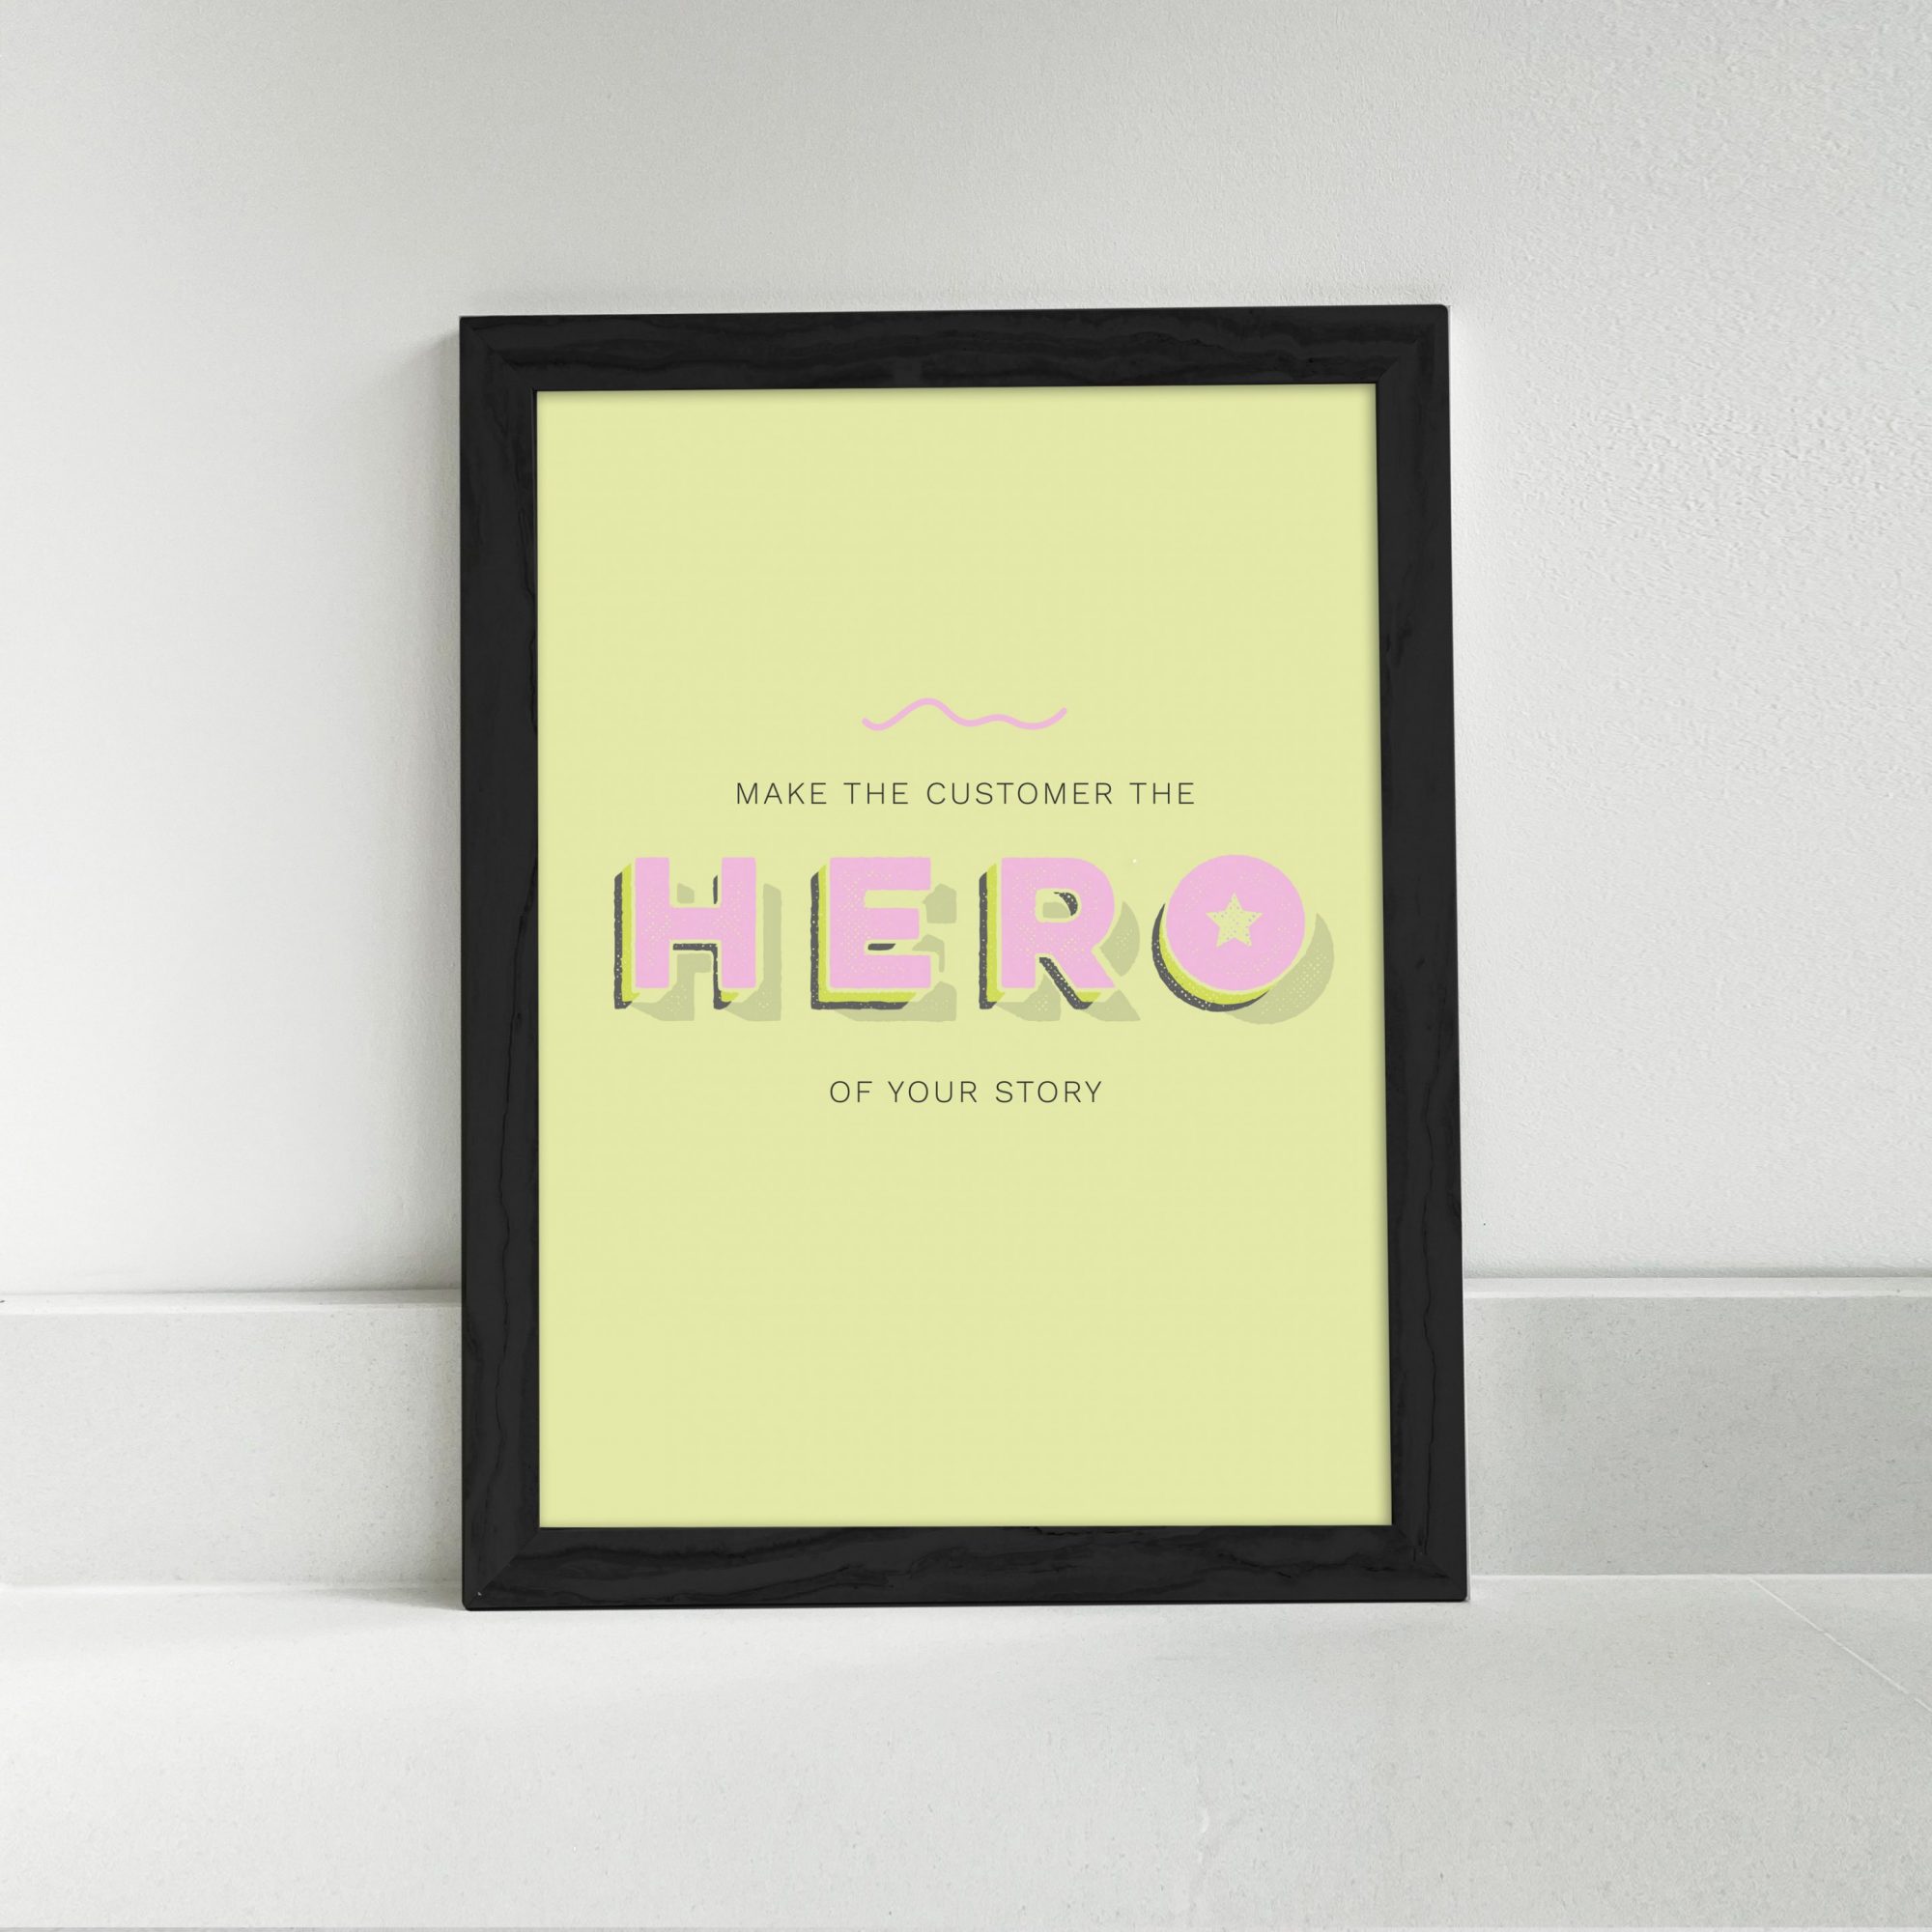 Make the customer the hero of your story: yellow